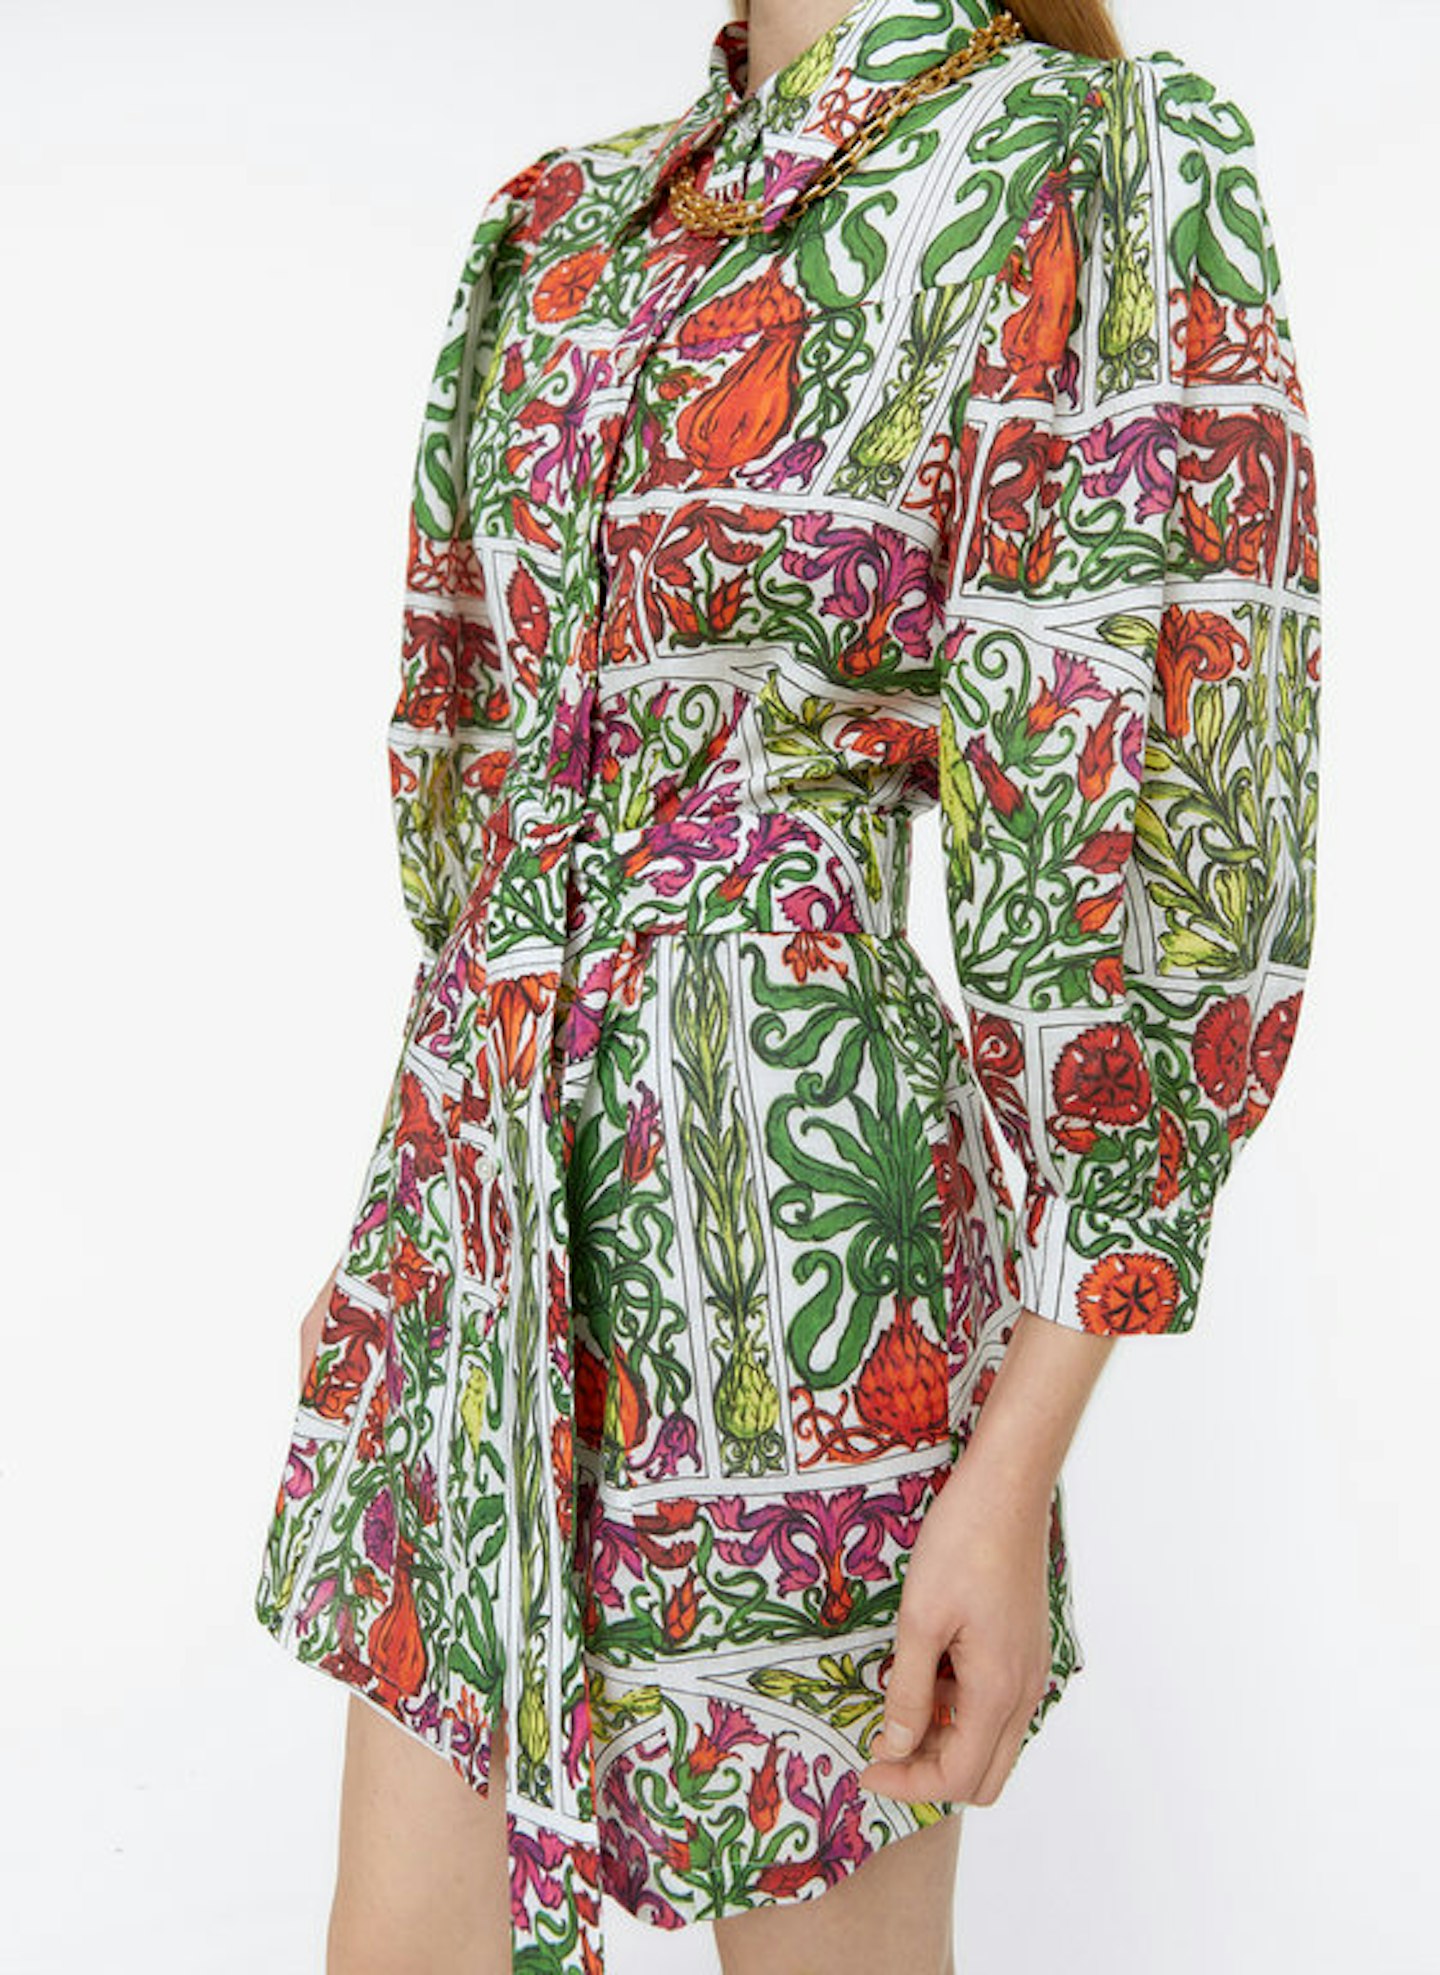 Uterque, Printed Linen Dress, £120